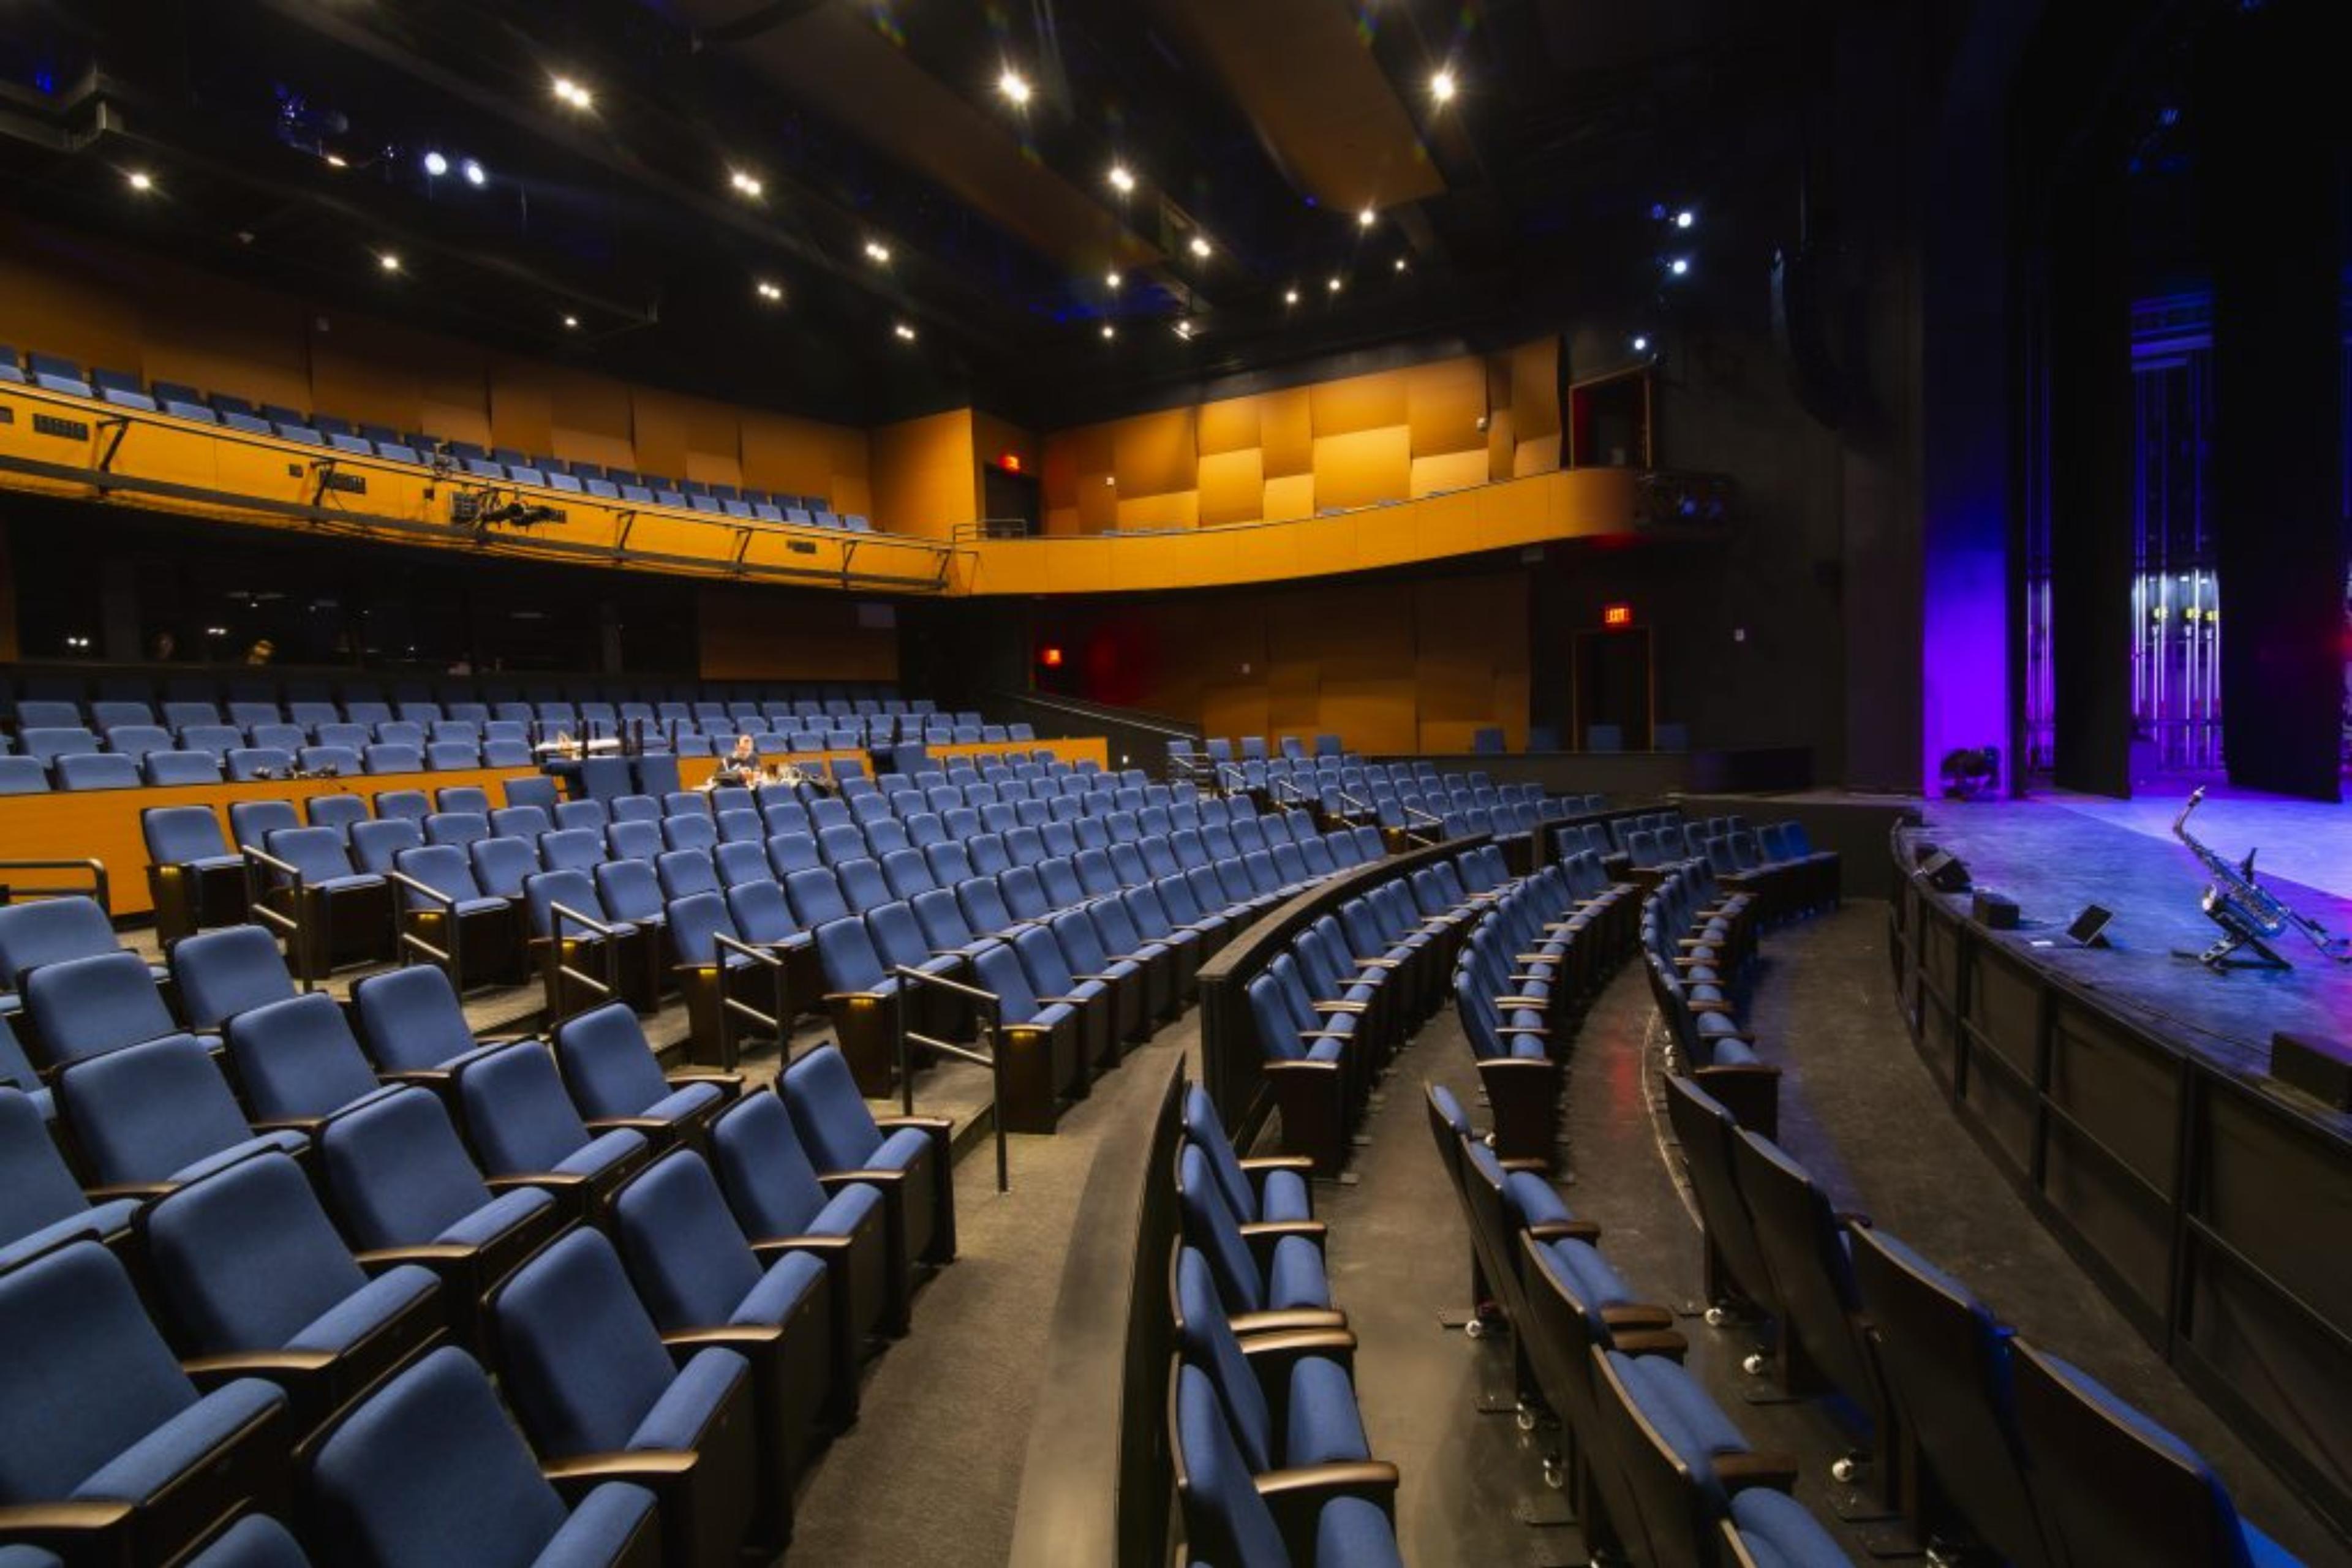 New Brunswick Performing Arts Center (NBPAC)